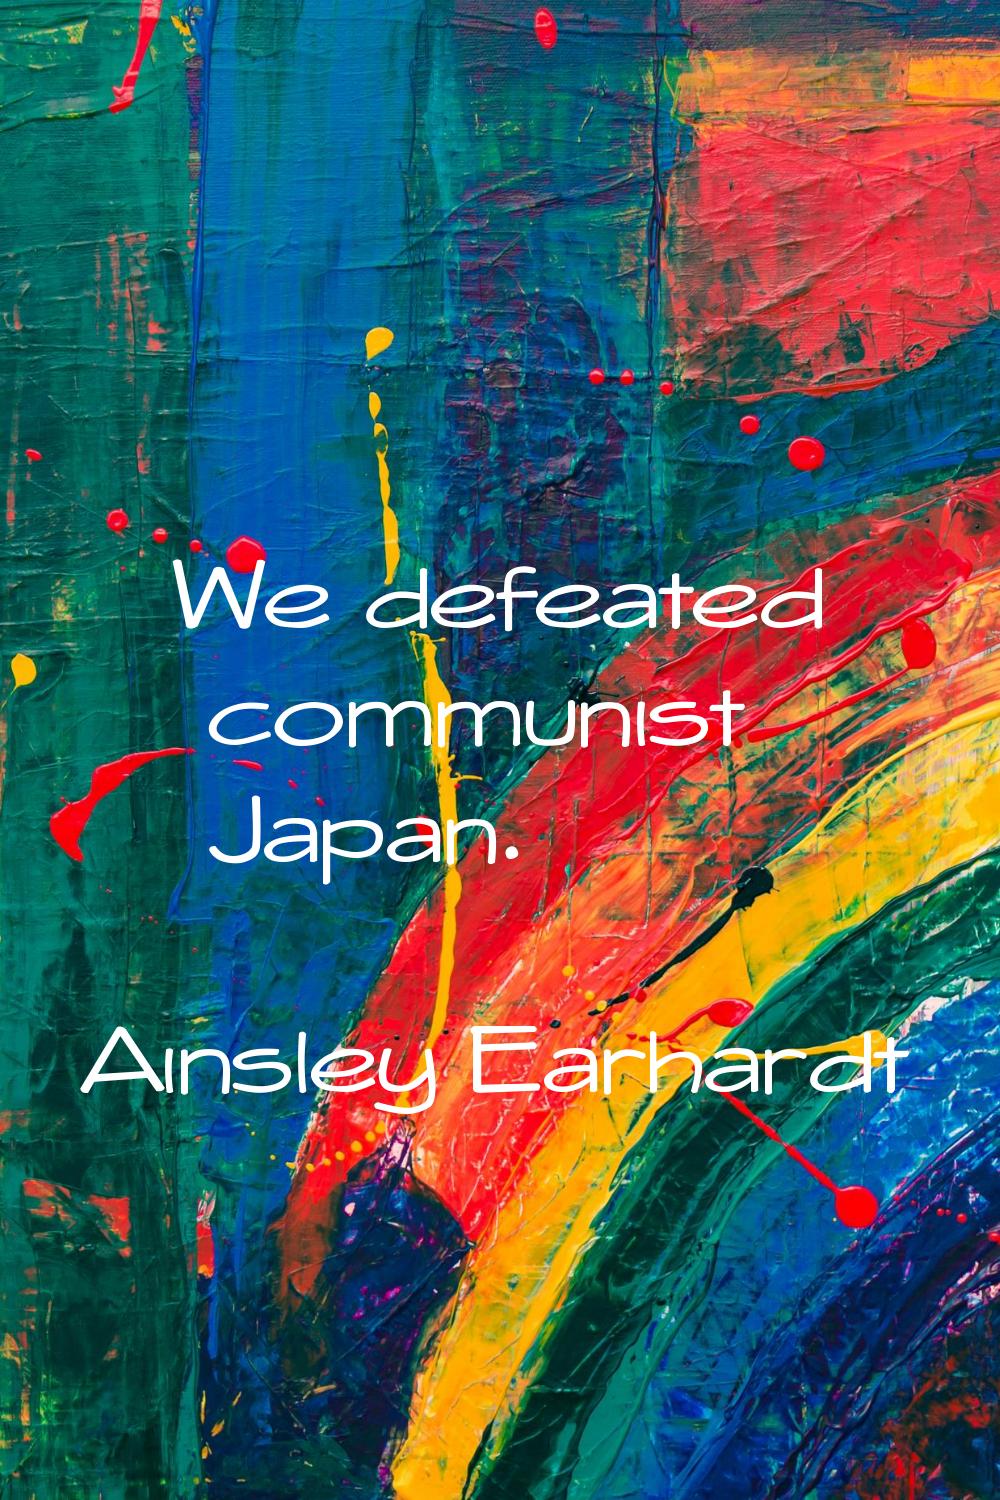 We defeated communist Japan.